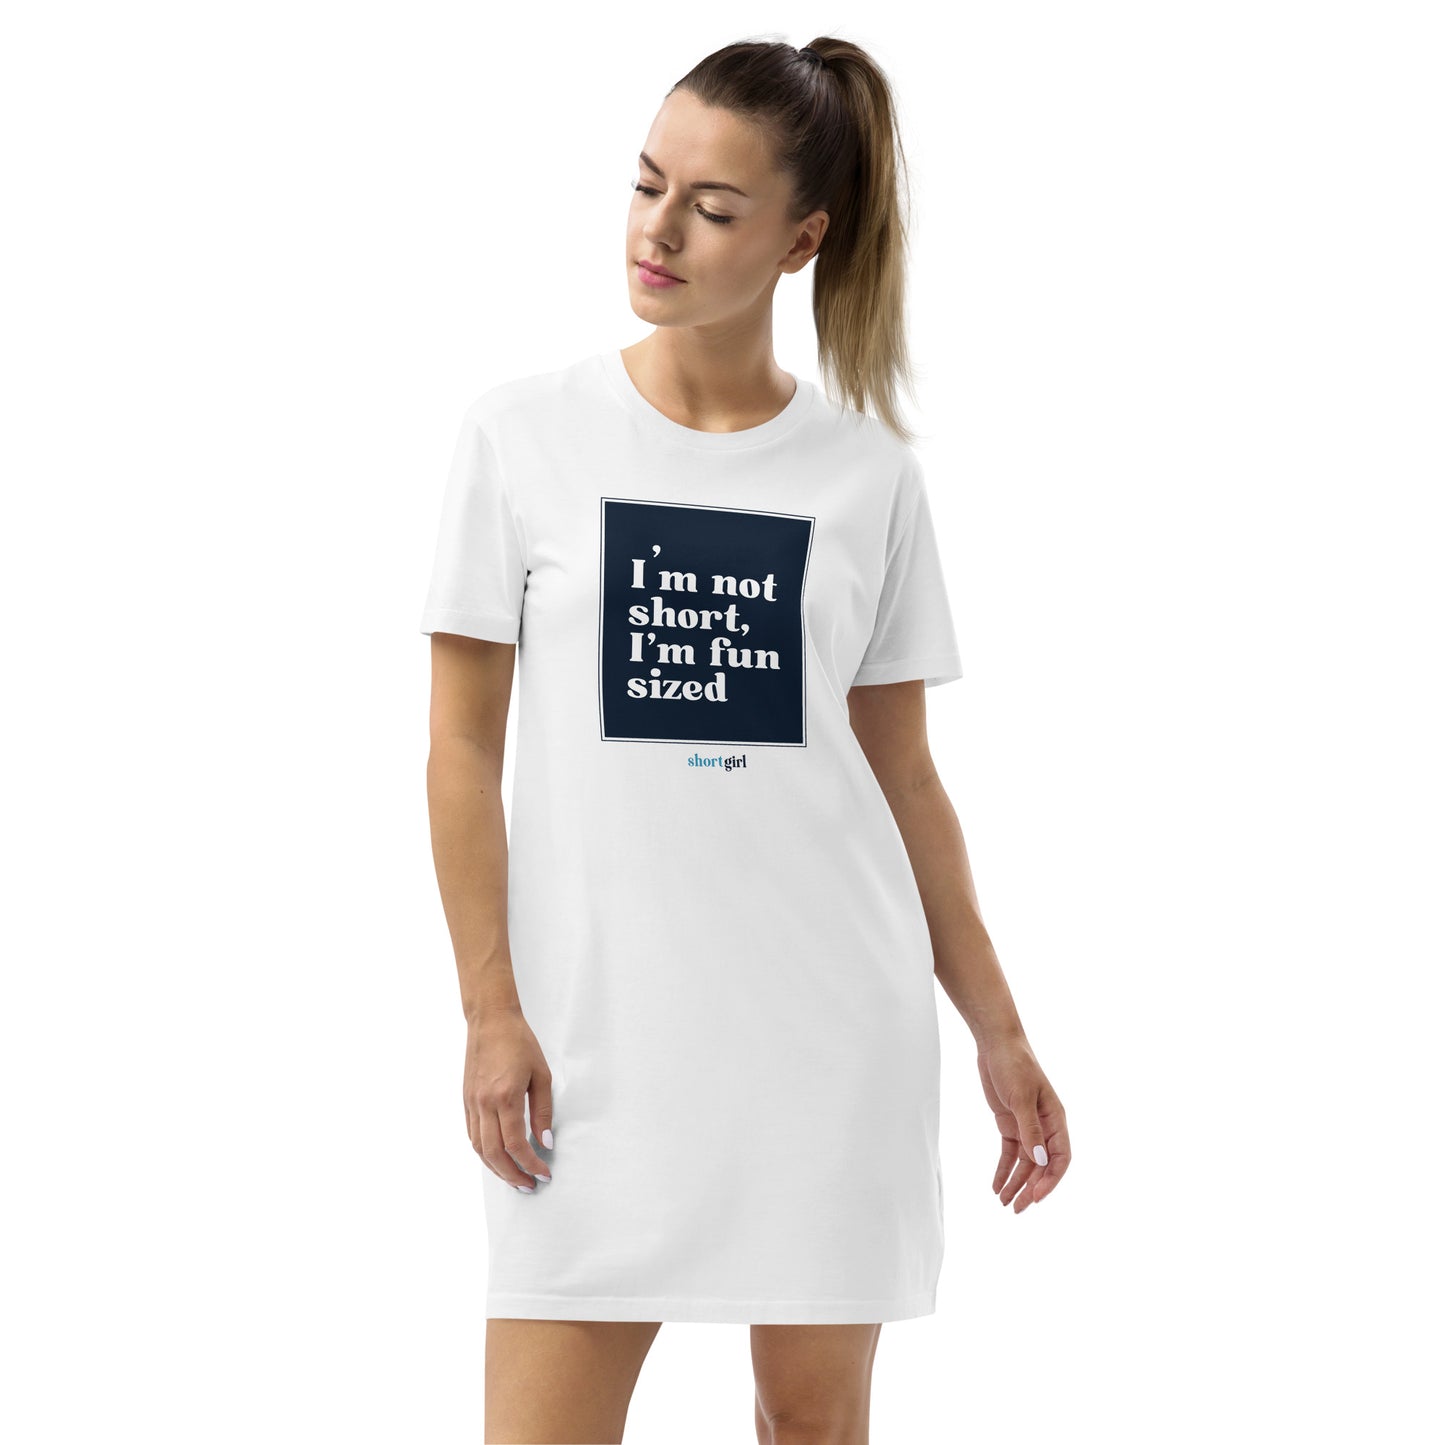 Organic cotton t-shirt dress - I'm not short, I'm fun sized